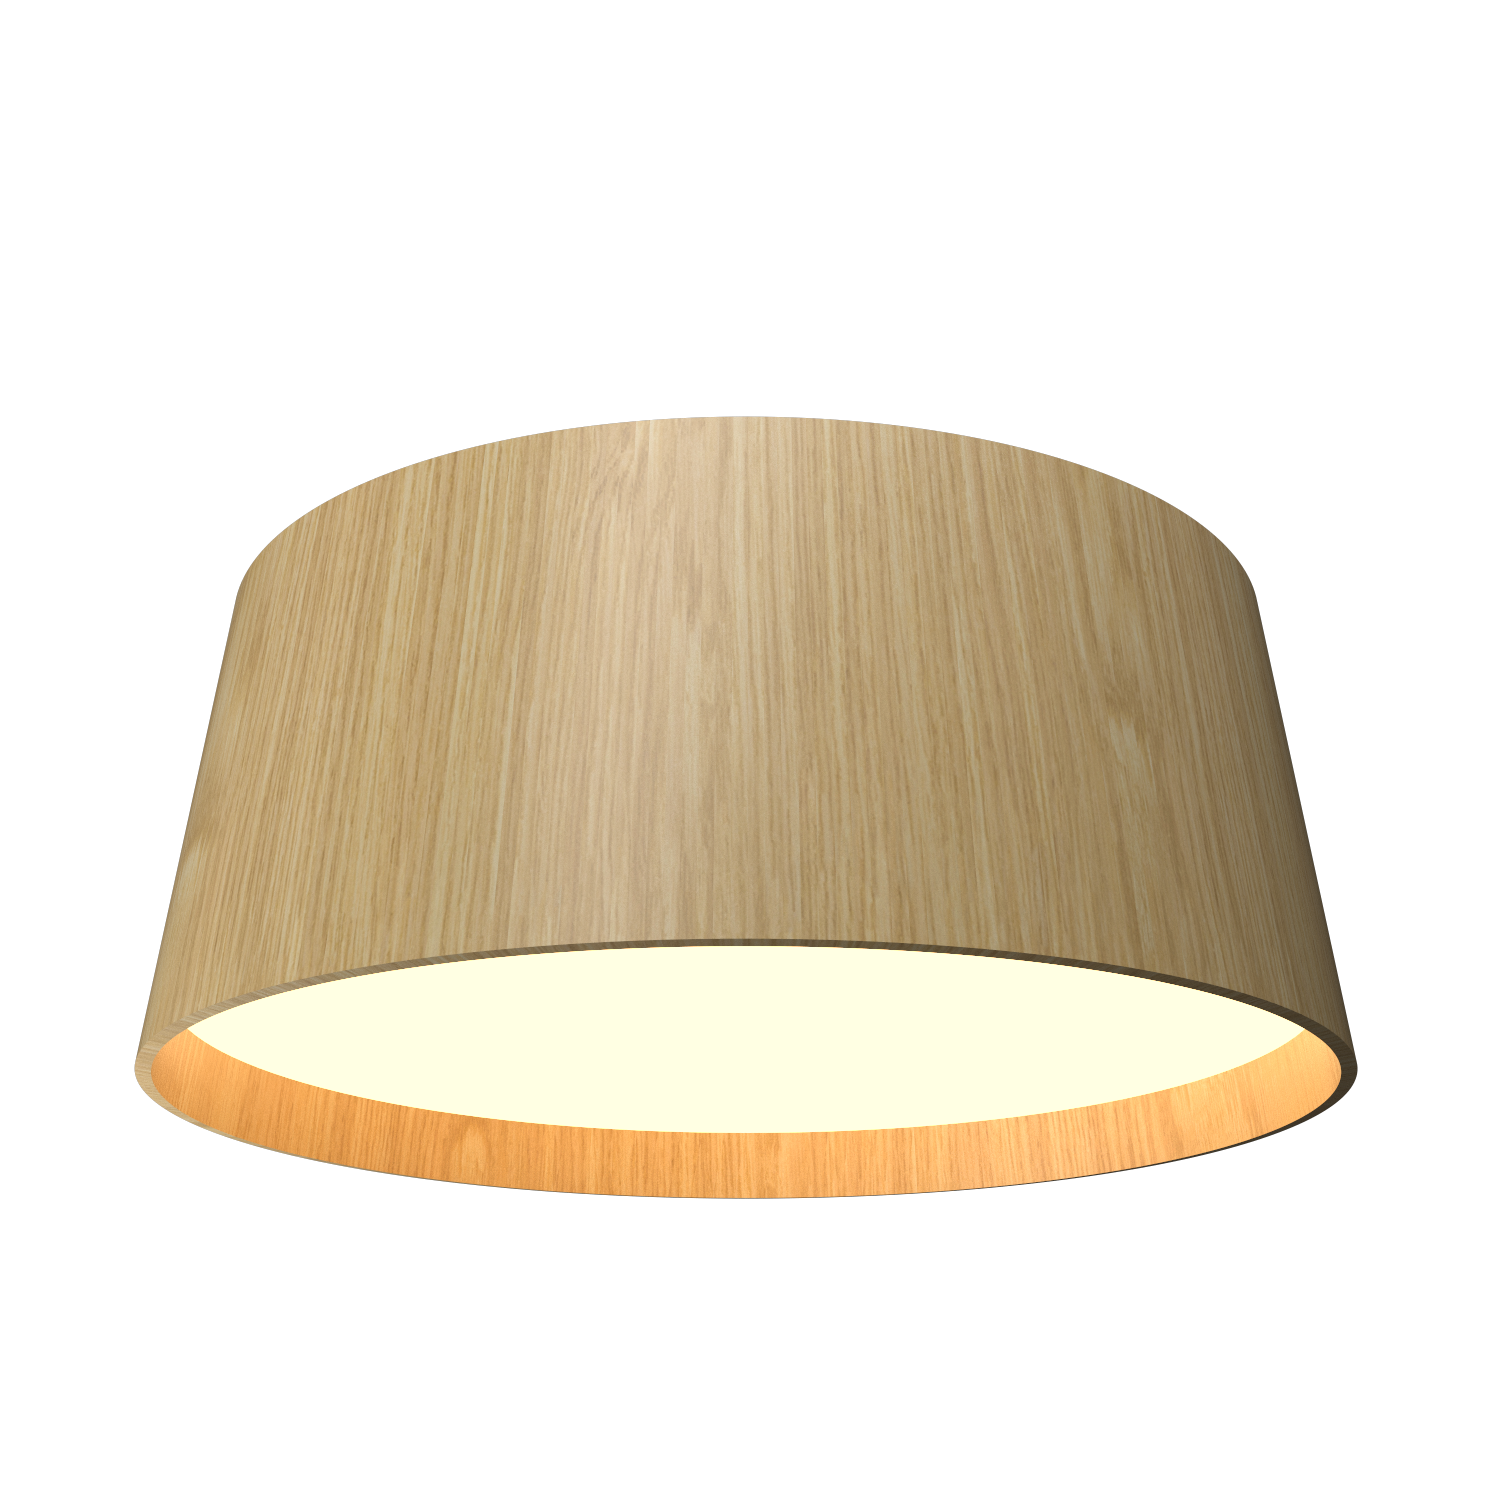 Ceiling Lamp Accord Cônico 5098 - Cônica Line Accord Lighting | 45. Sand